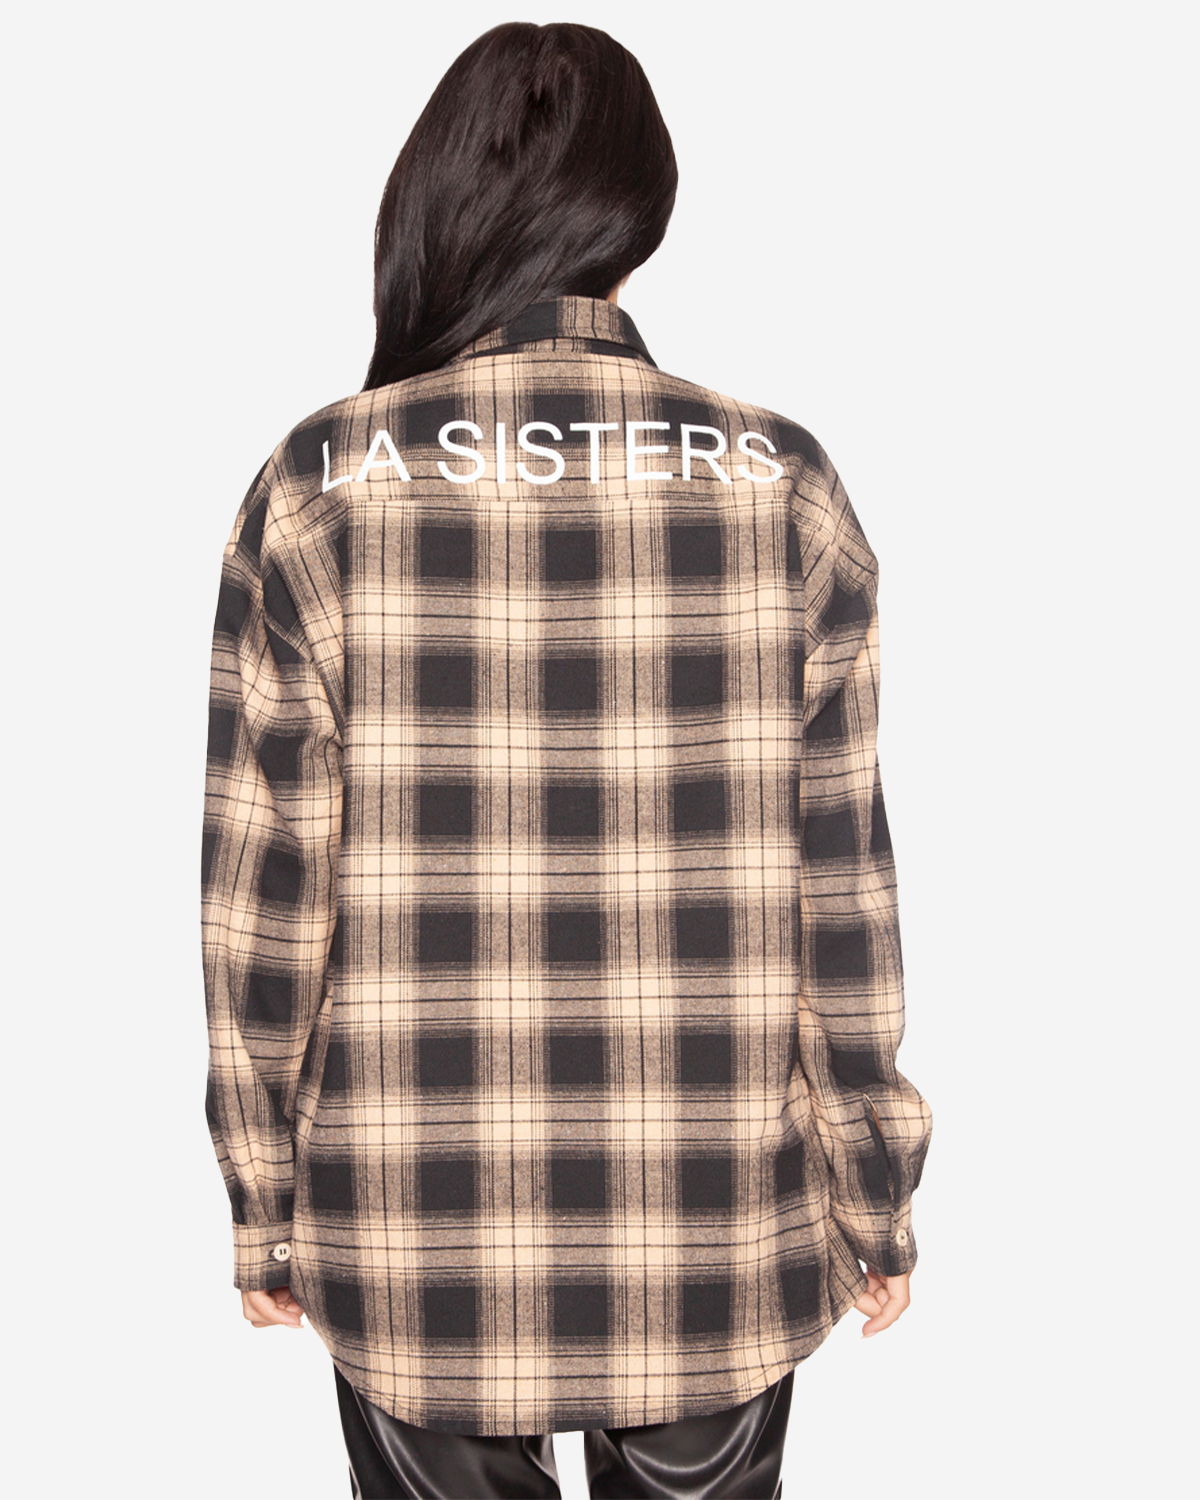 La Sisters Oversized Check Shirt Beige